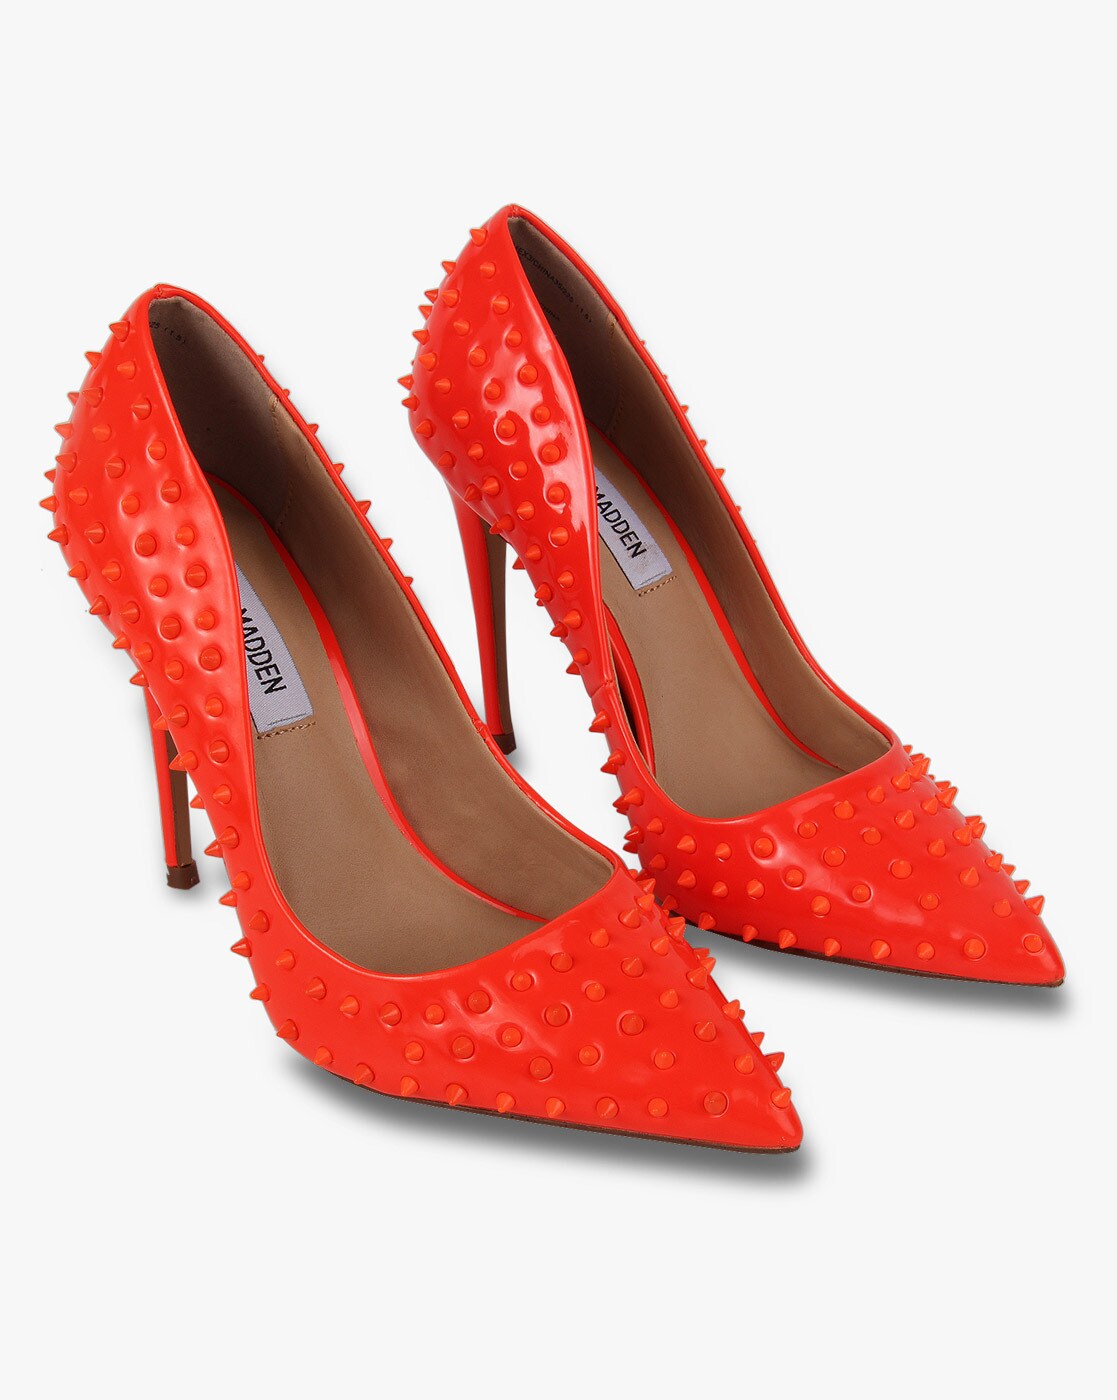 Santiago red high heels | eBay